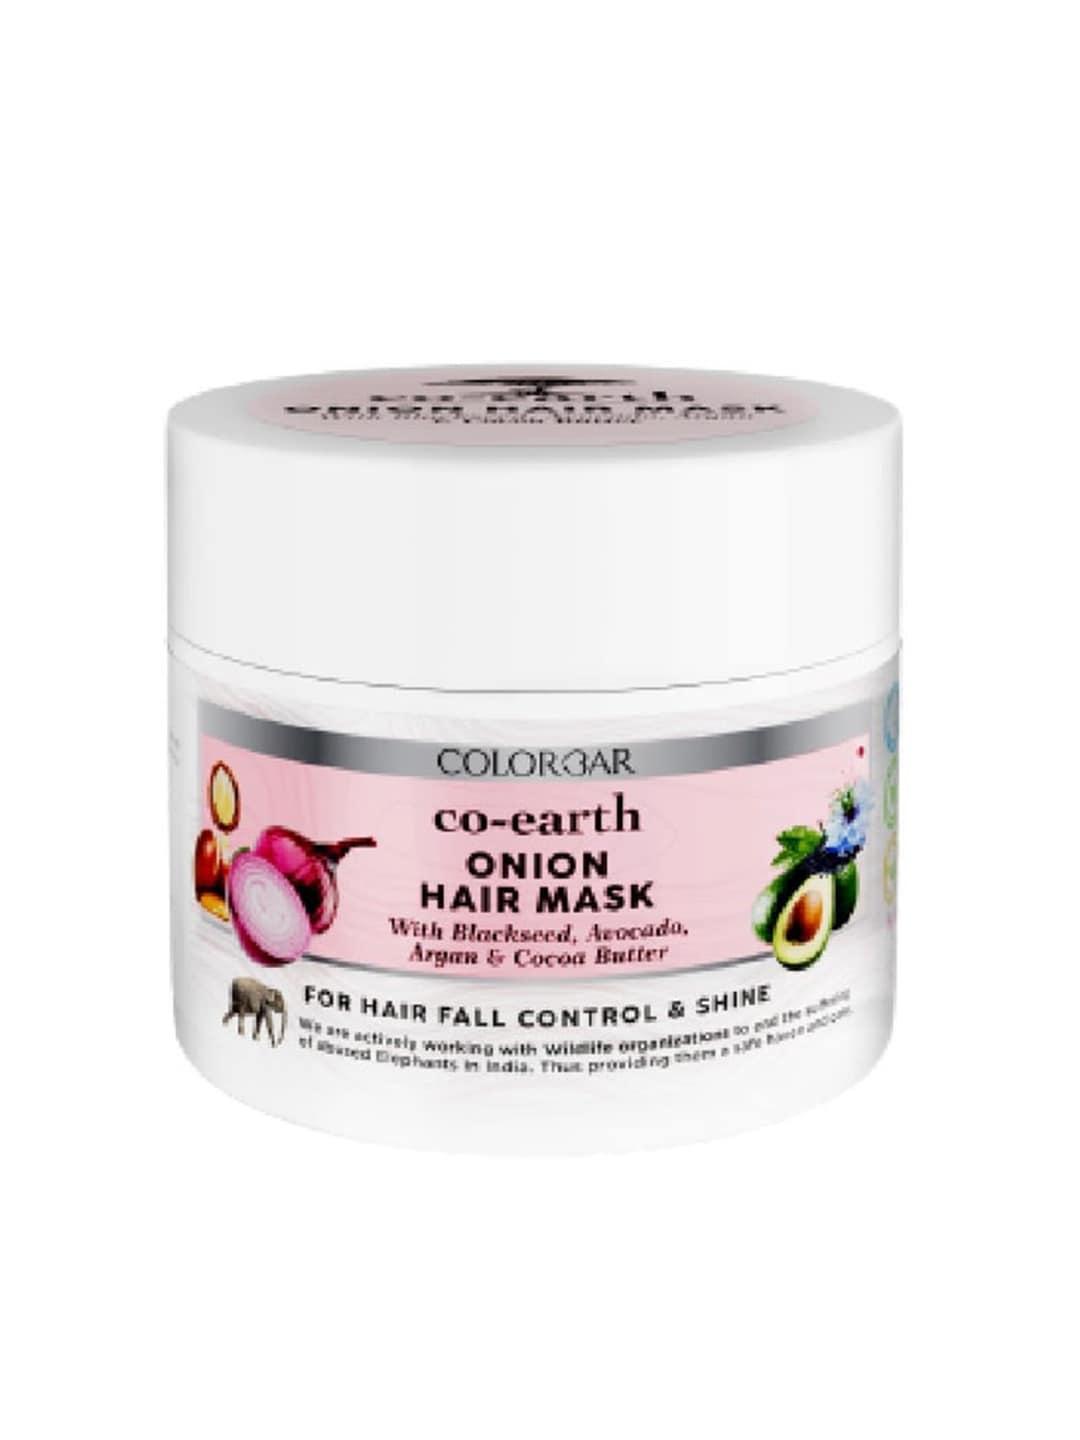 Colorbar Onion Hair Mask